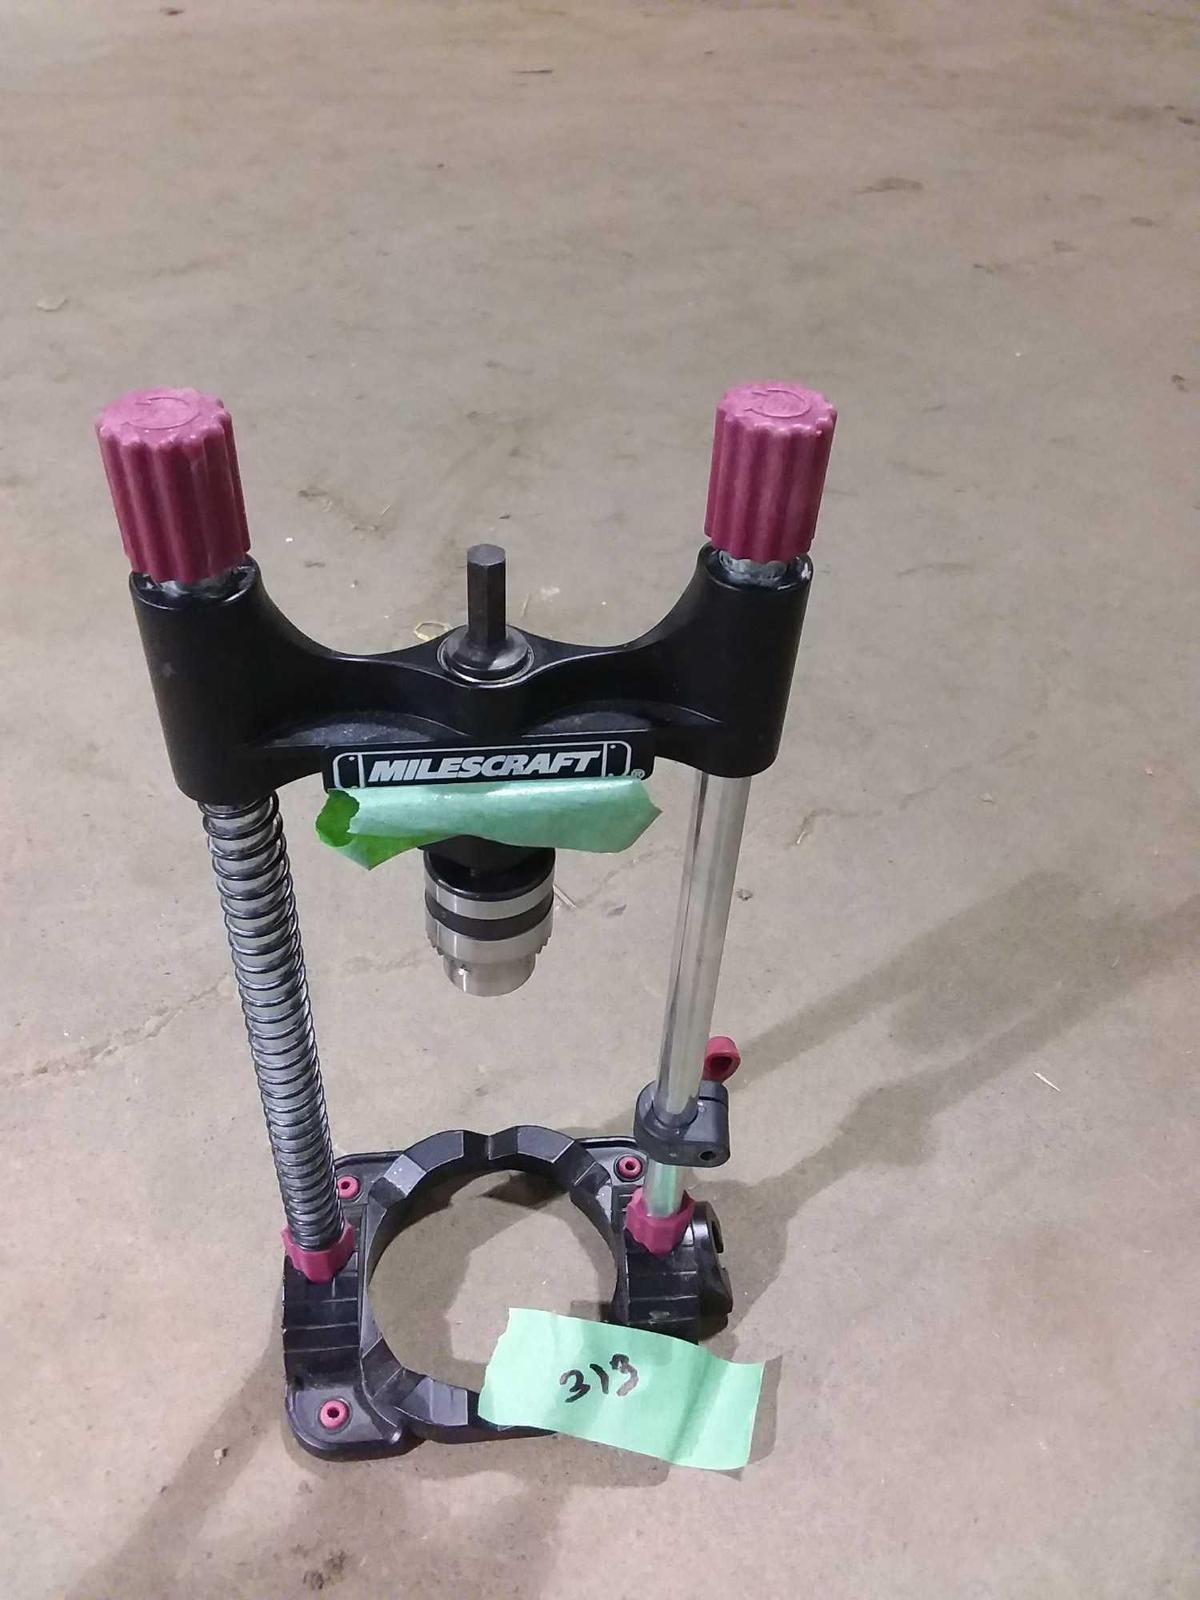 Portable adjustable drill press